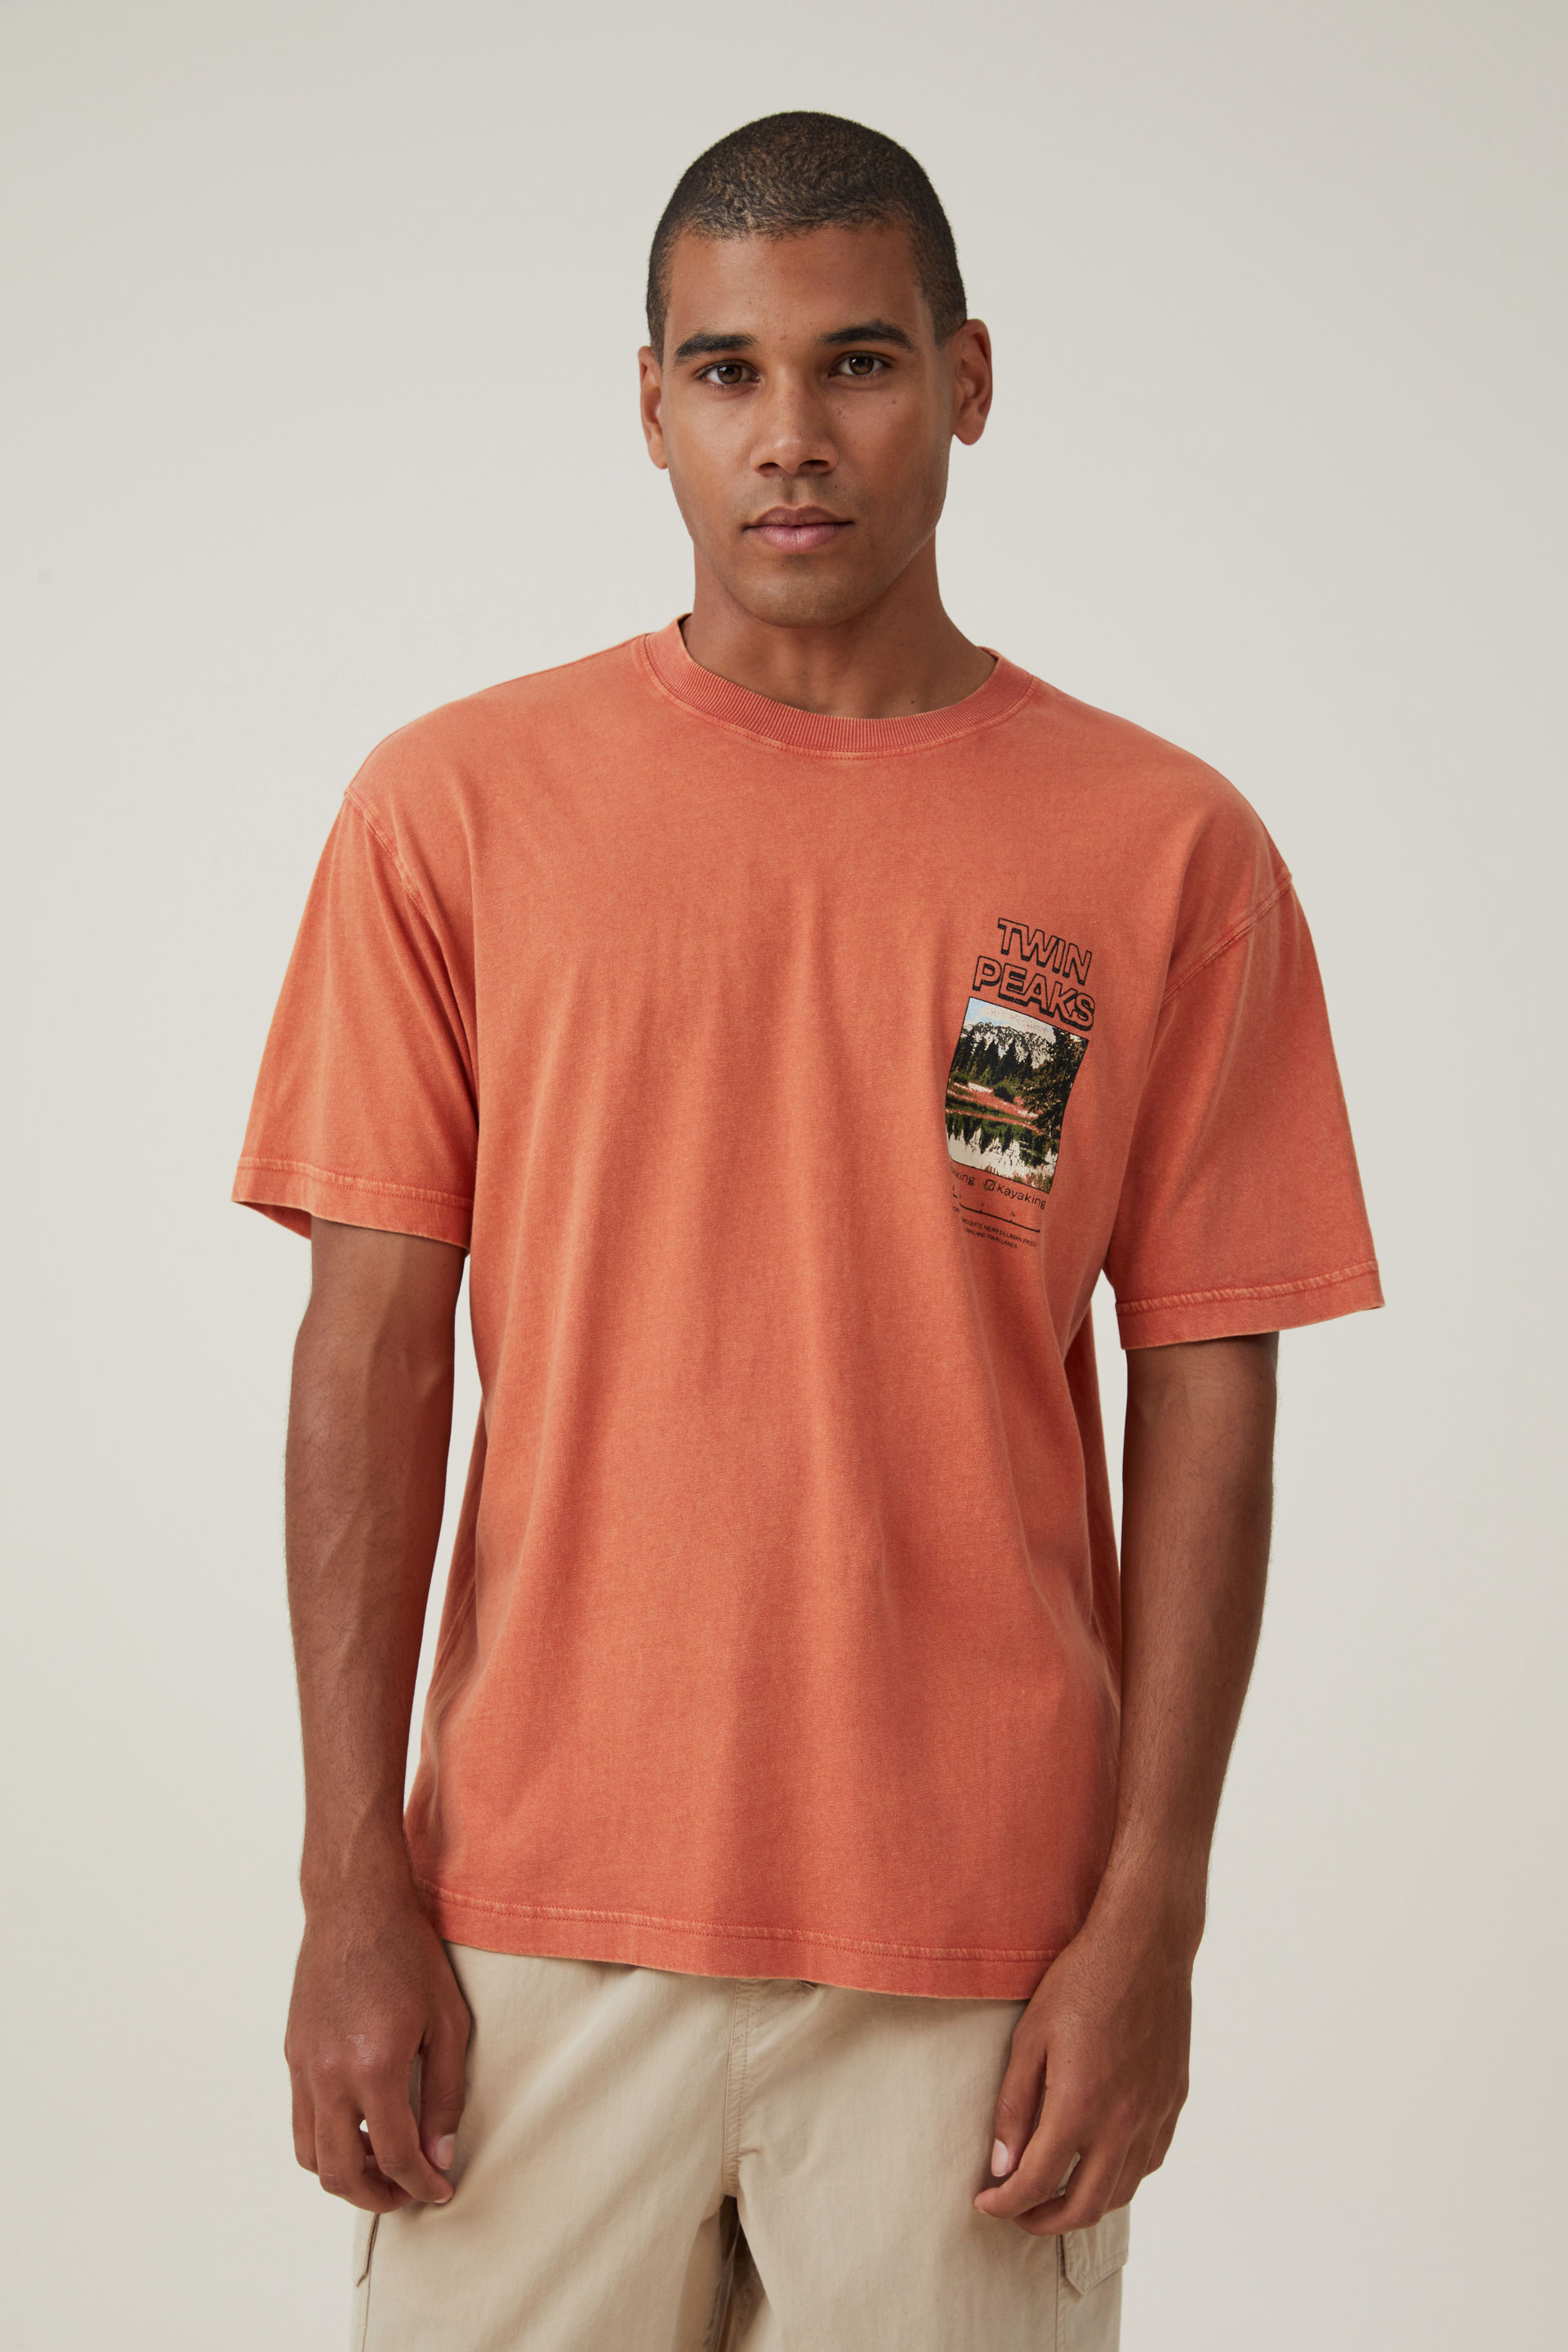 Cotton On Men - Premium Loose Fit Art T-Shirt - Burnt jaffa/twin peaks